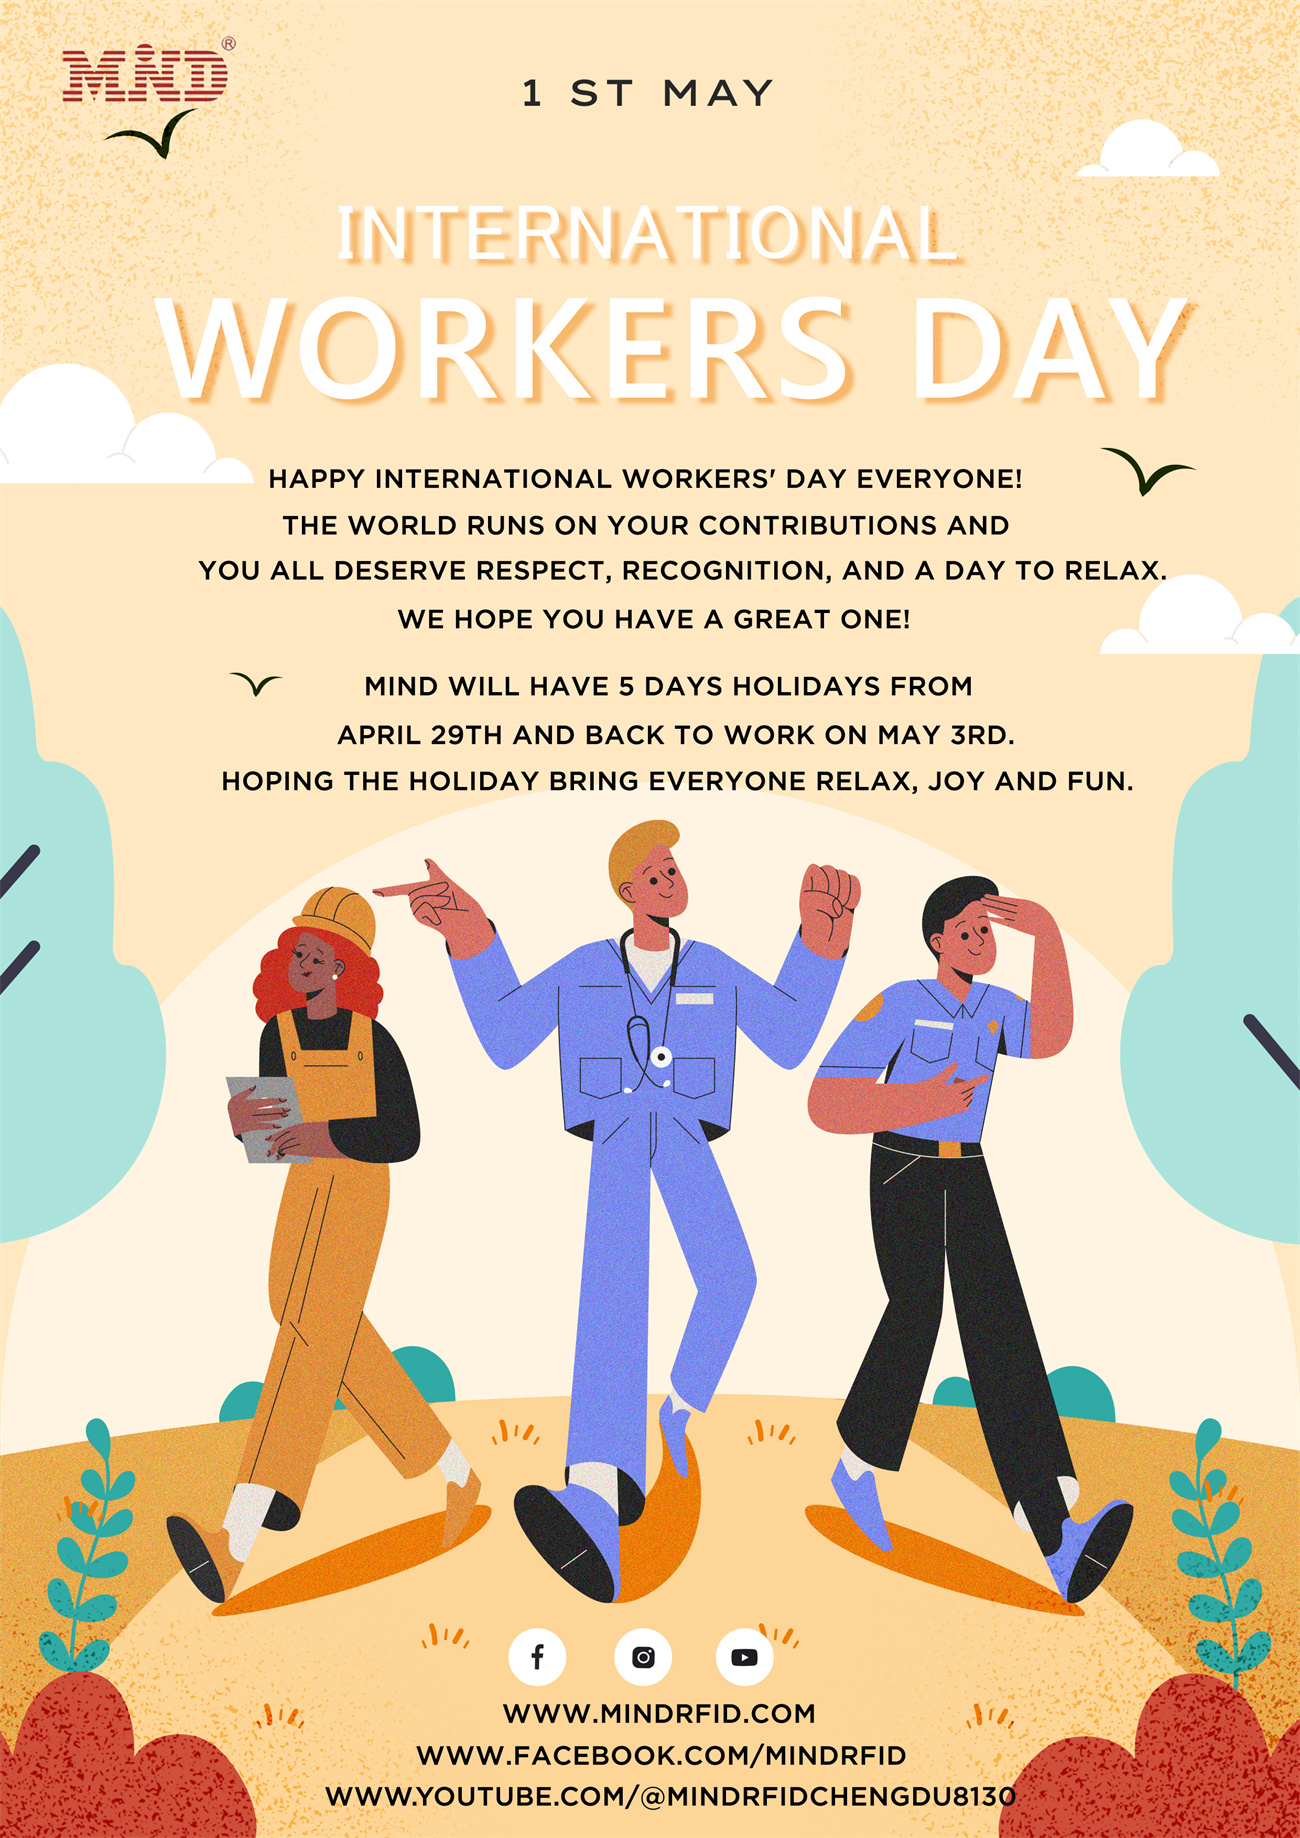 Happy Labor Day everyone!